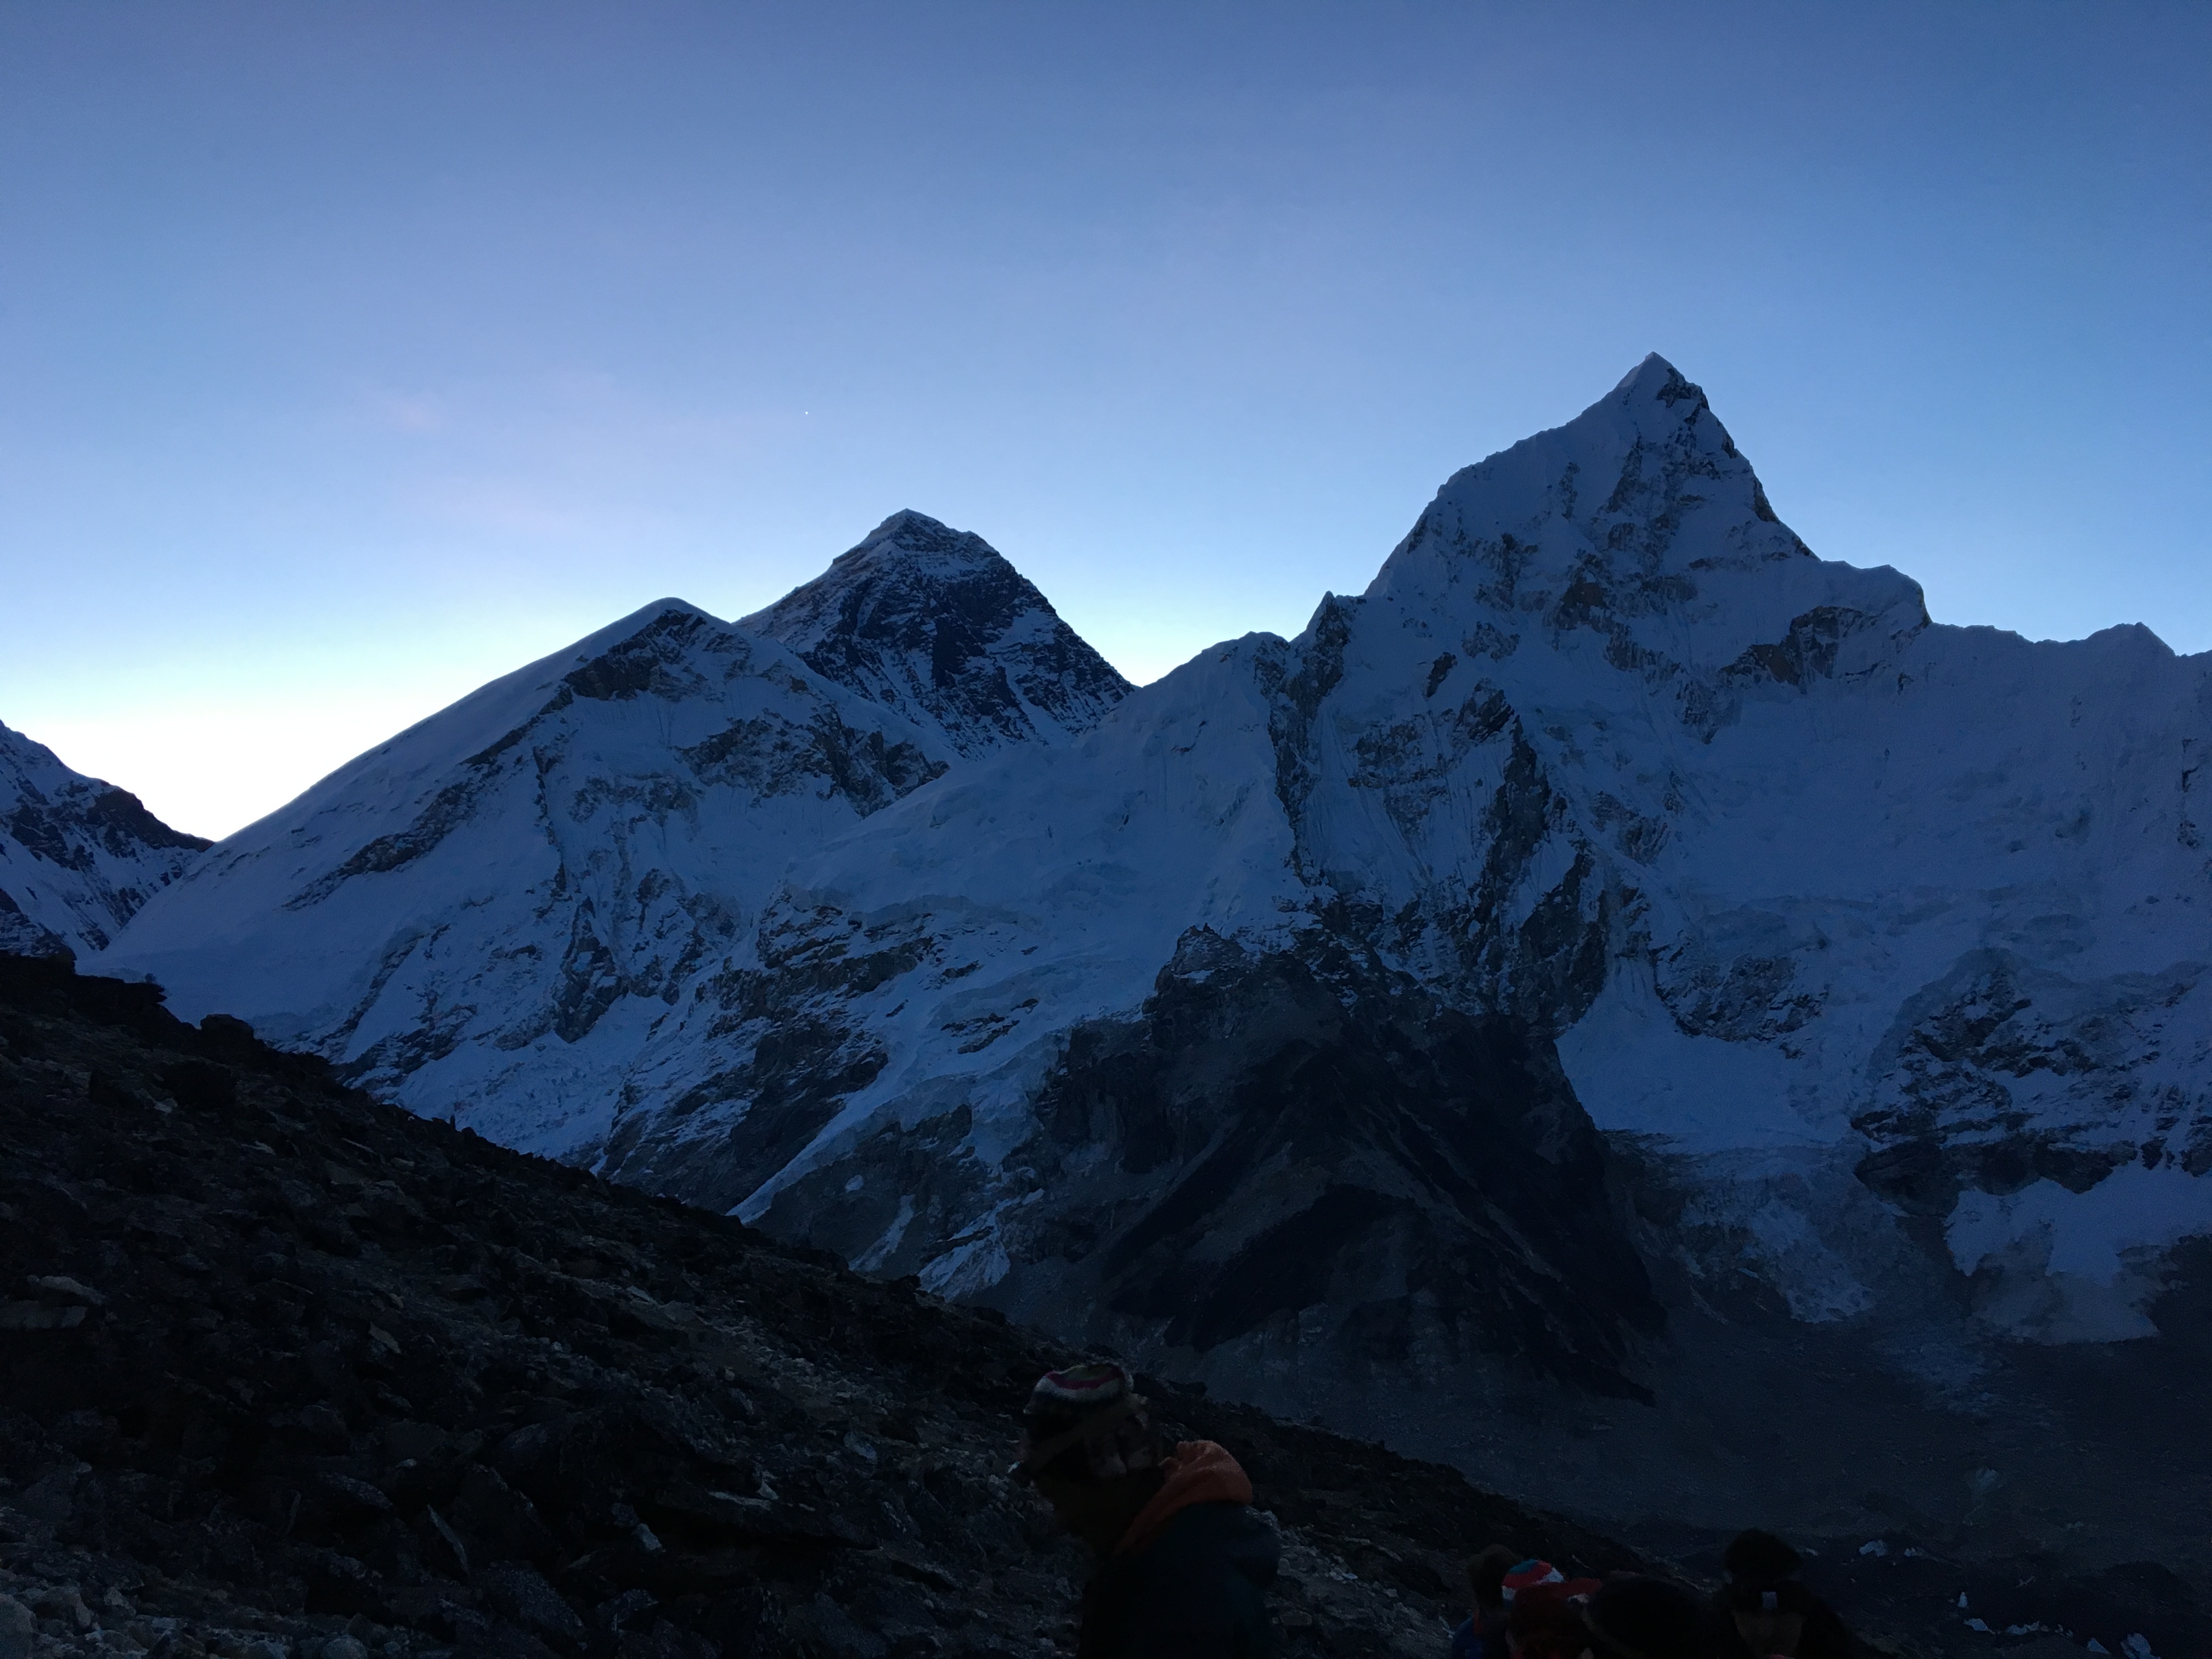 View from Kala Patthar towards Everest